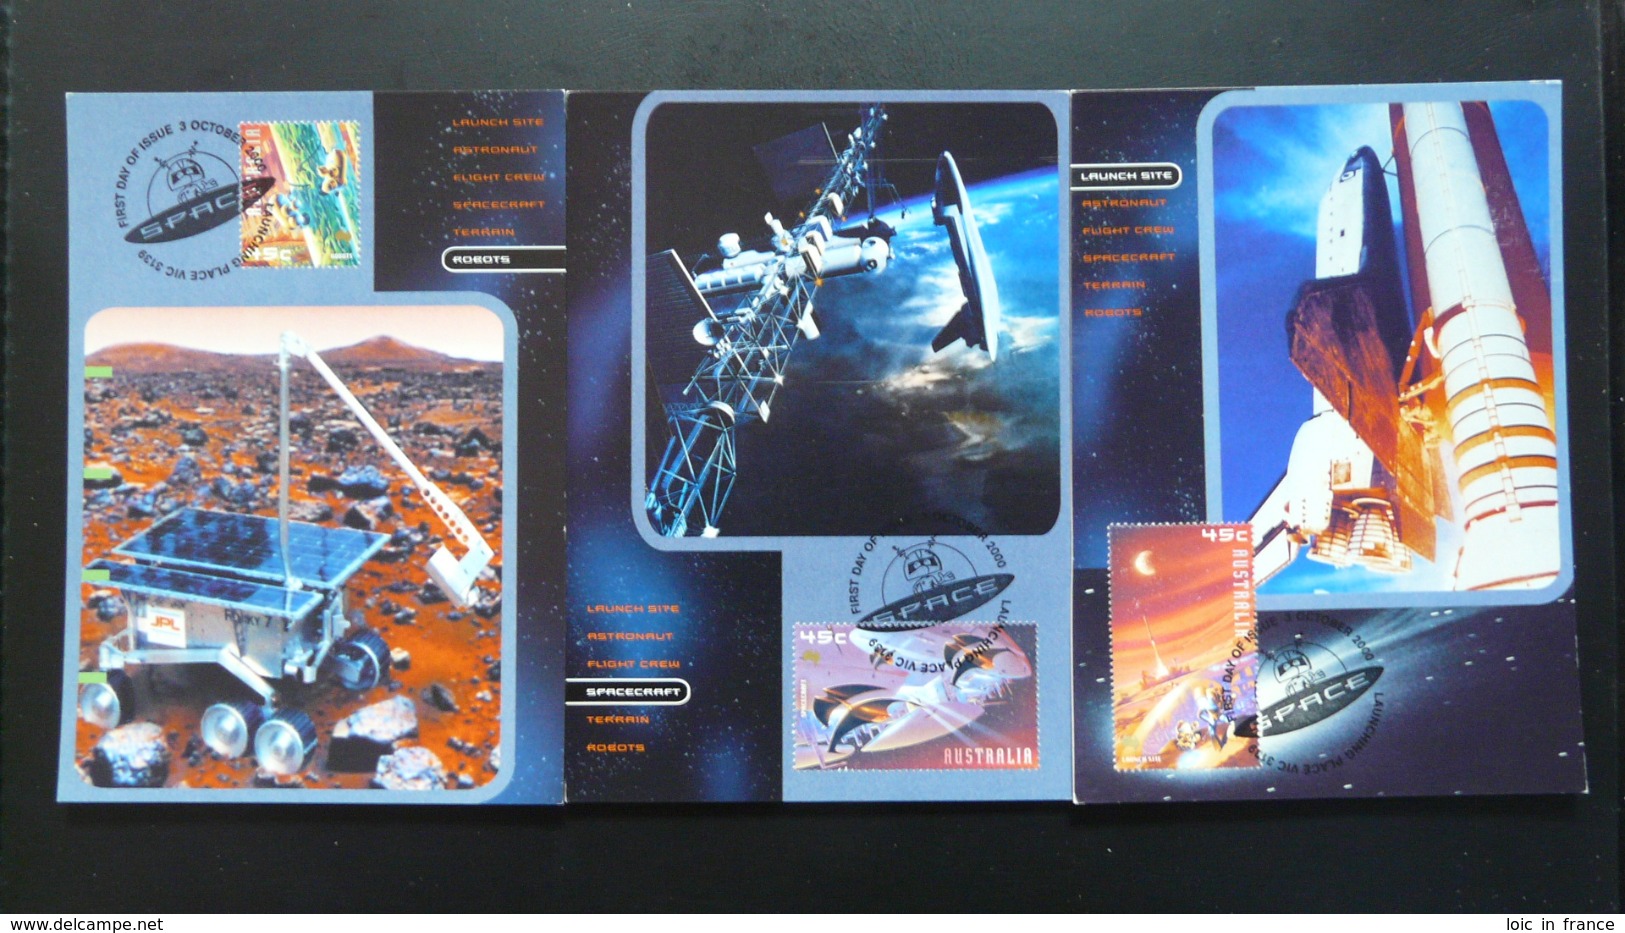 Carte Maximum Card (x6) Conquête De L'espace Space Conquest Australie Australia (ref 85054) - Oceanía